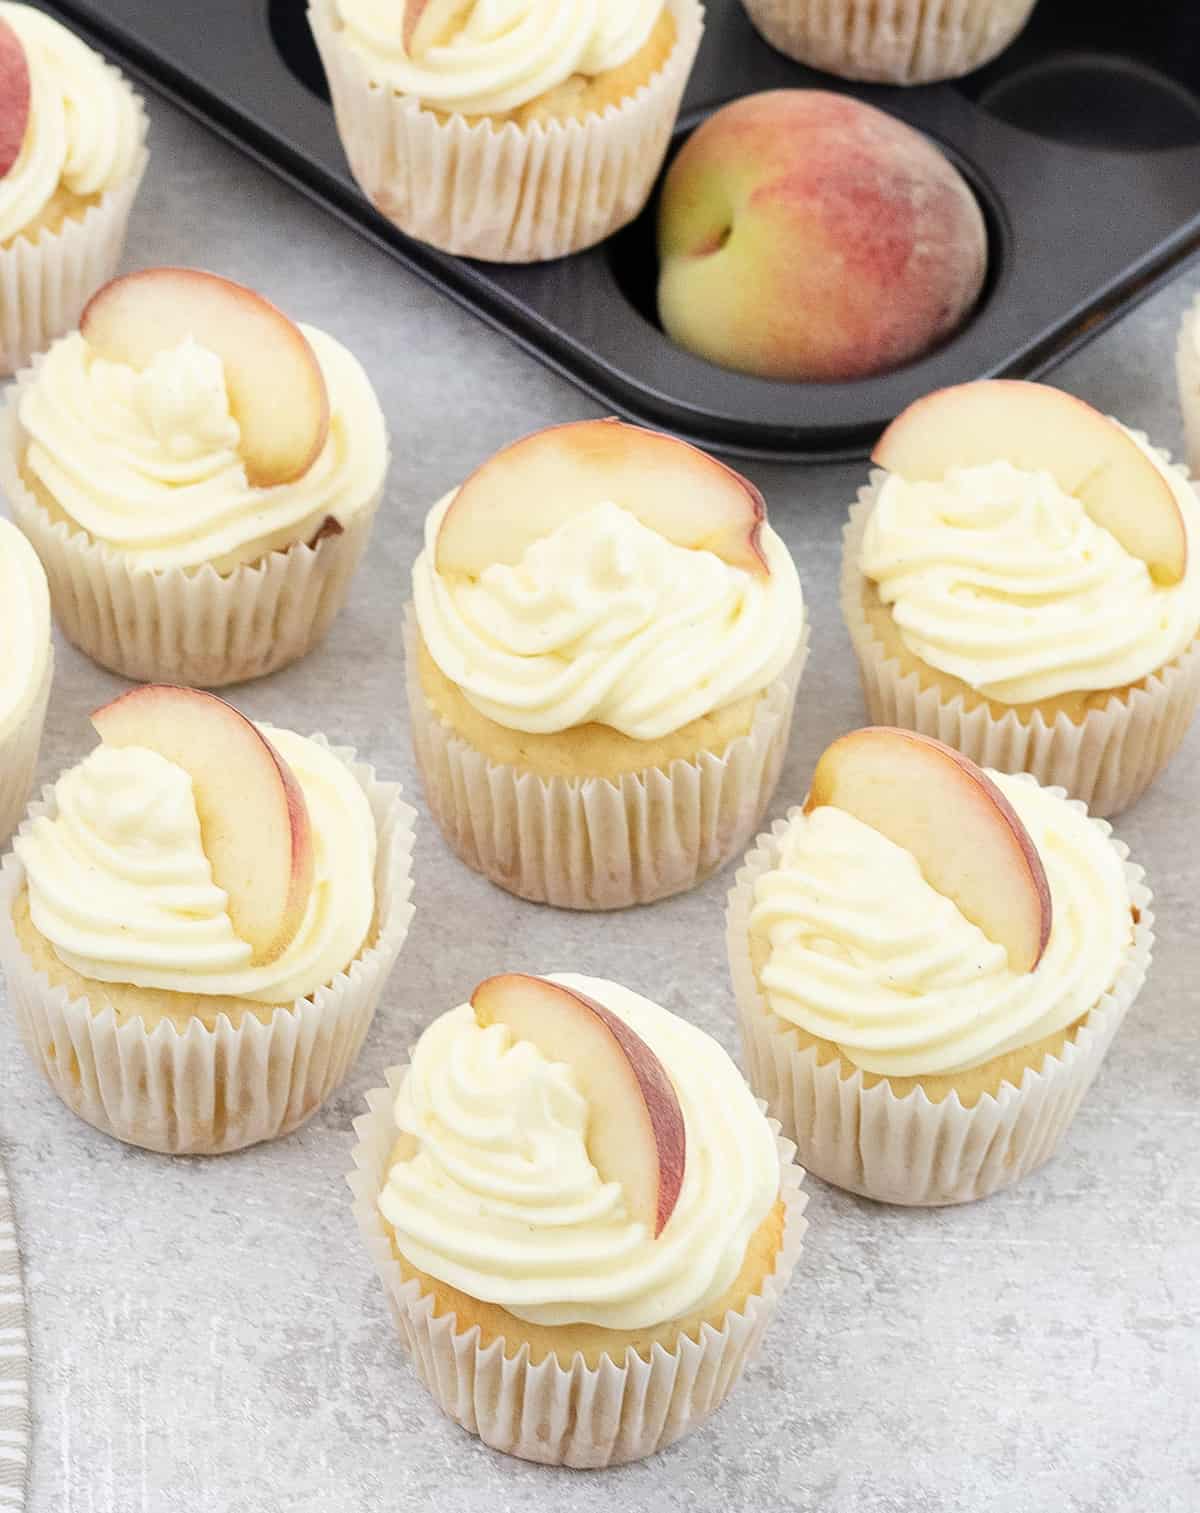 Peach Cupcakes topped wit a fresh peach slice